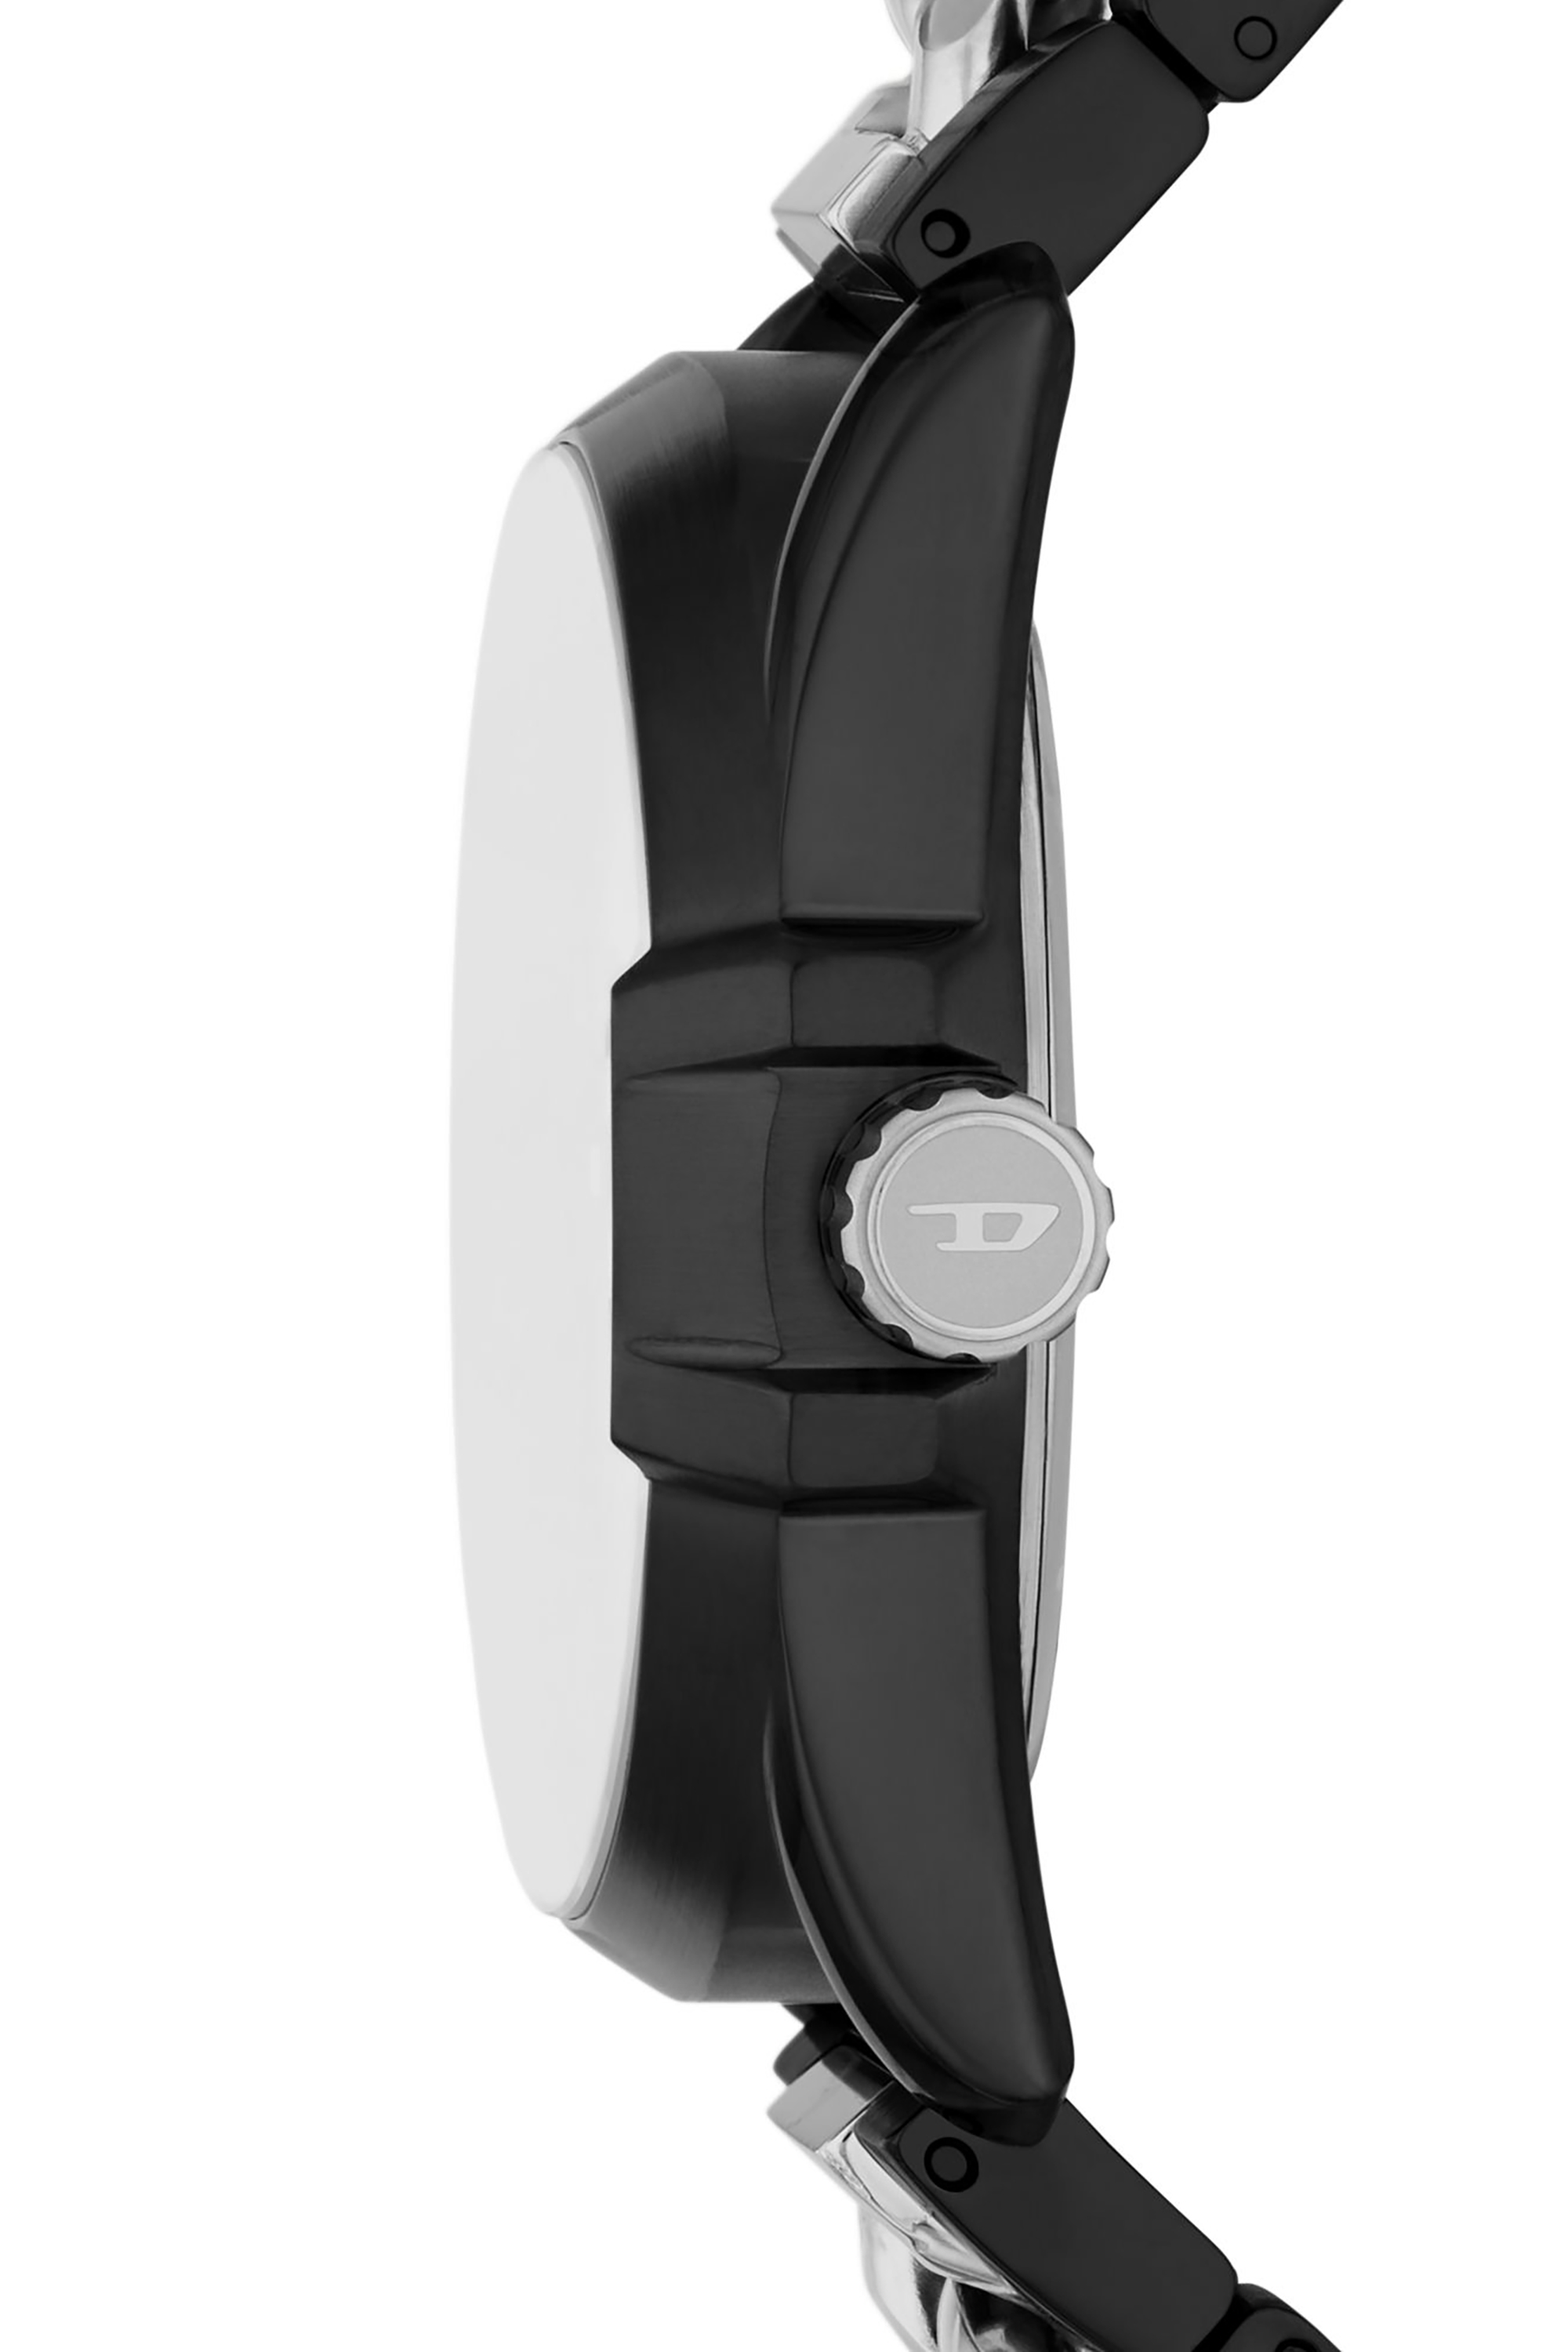 DZ4610 Man: Split Chronograph Black Leather Watch | Diesel